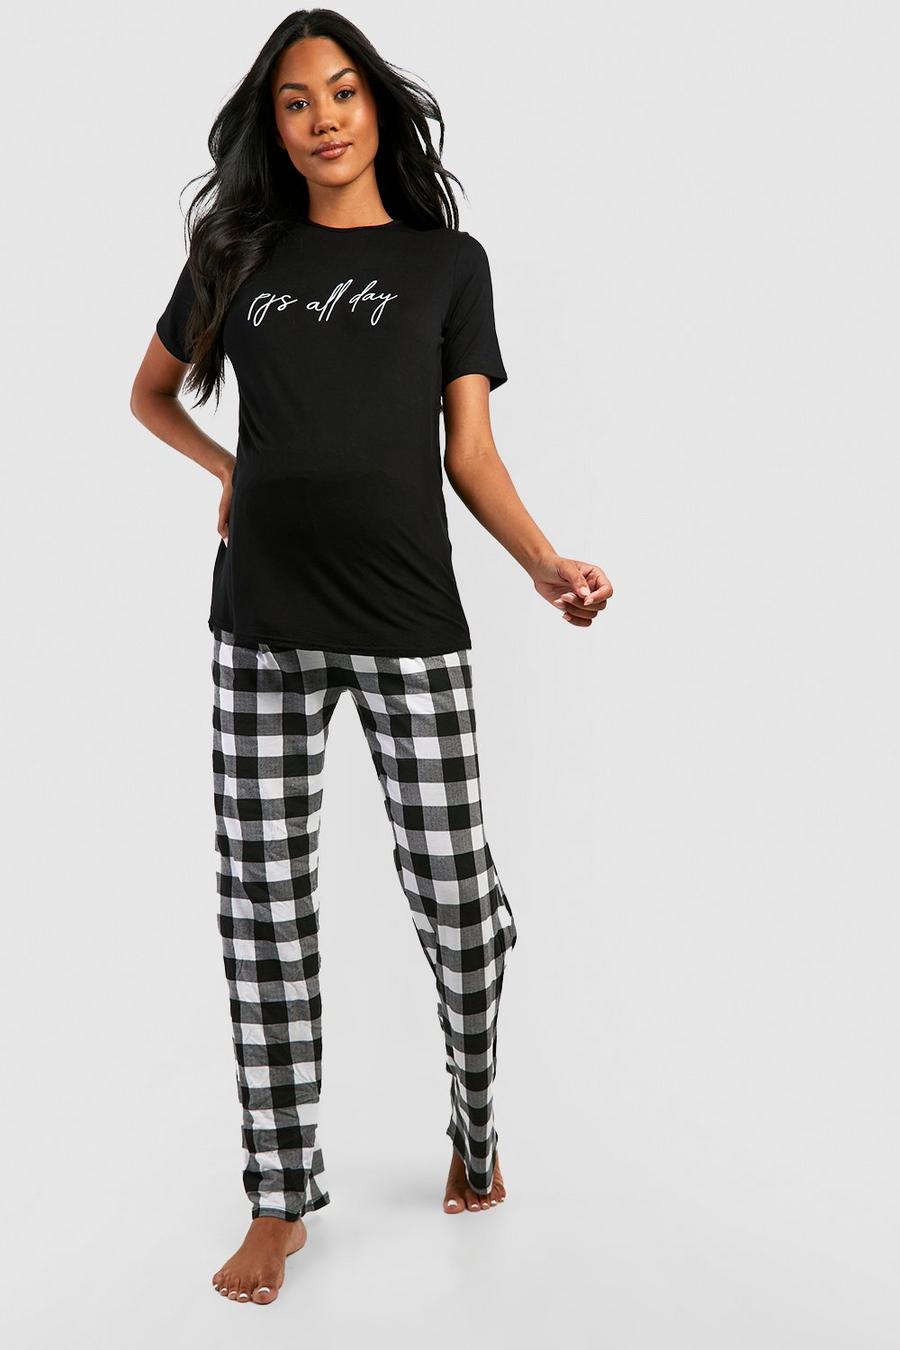 Black Maternity Pjs All Day Pyjama Trouser Set